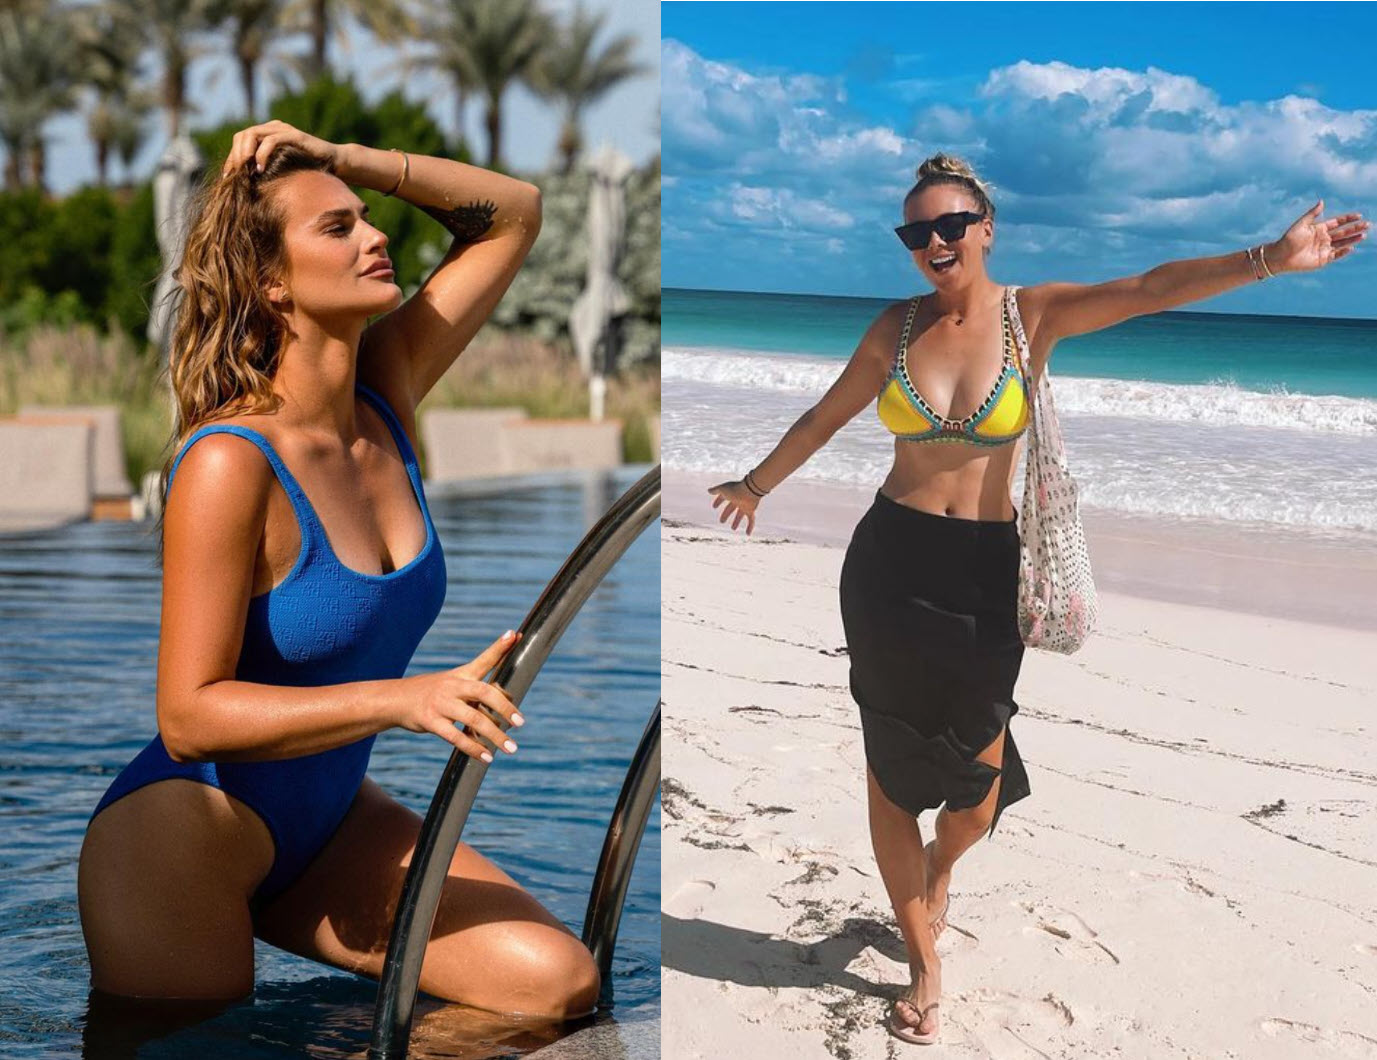 Sabalenka, Anisimova hot and top pictures ina bikini at the beach